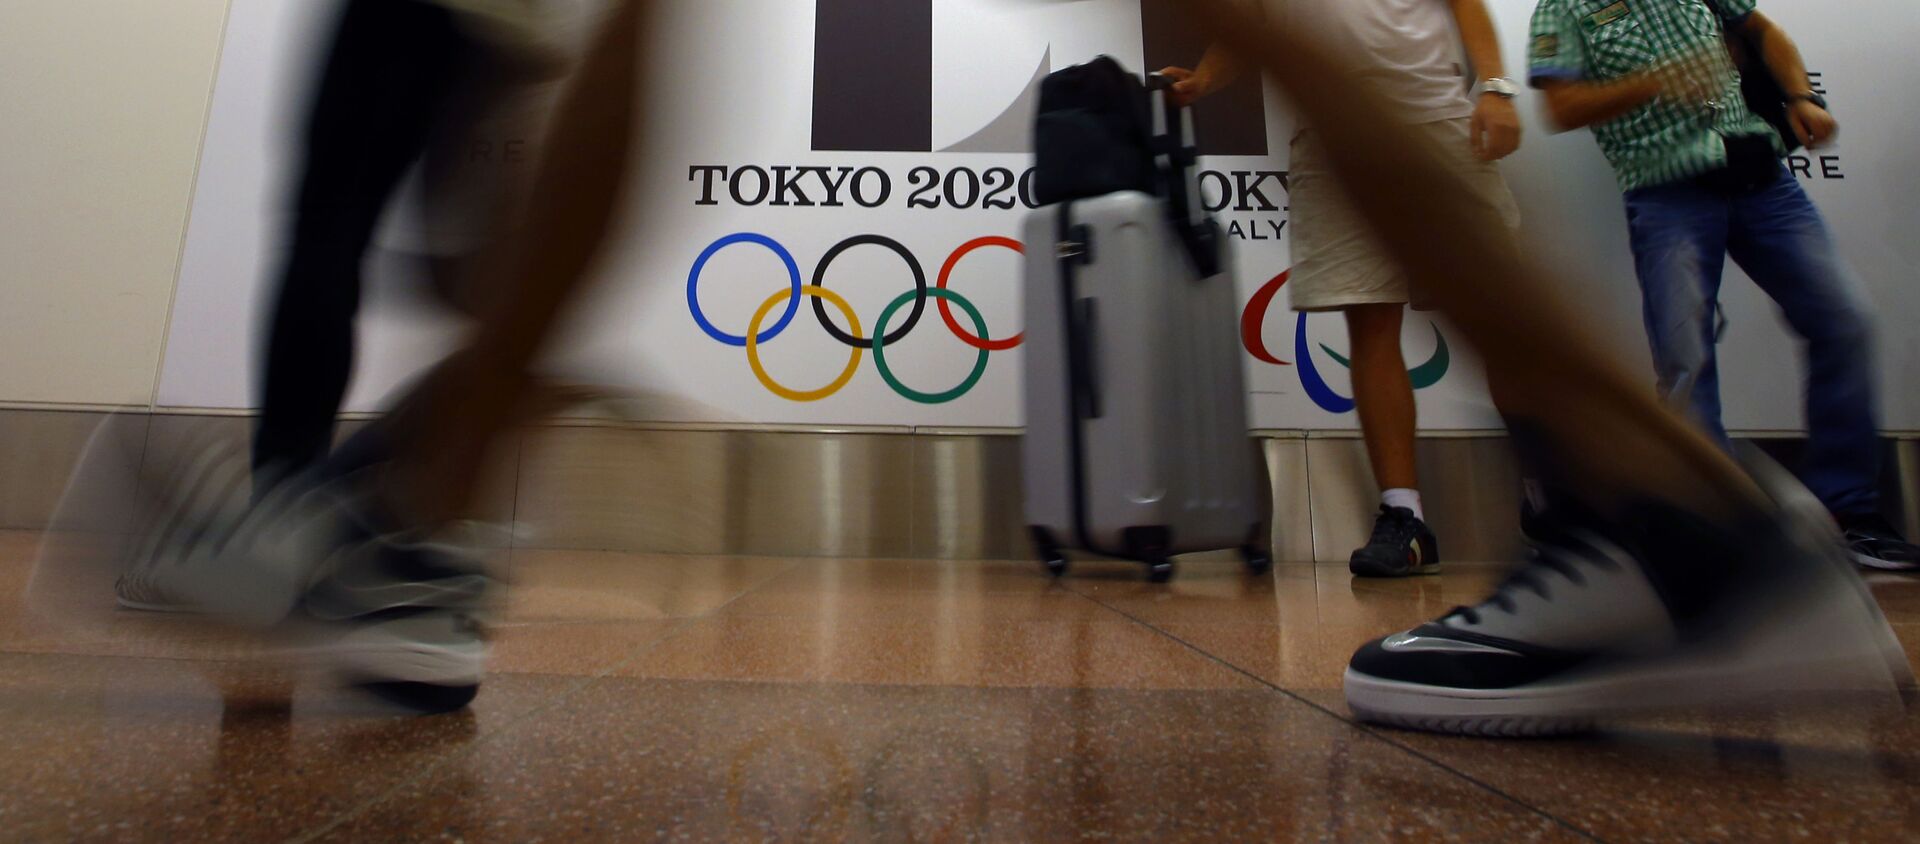 Туристы проходят мимо плаката с логотипом Олимпиады в Токио, фото из архива - Sputnik Азербайджан, 1920, 03.01.2021